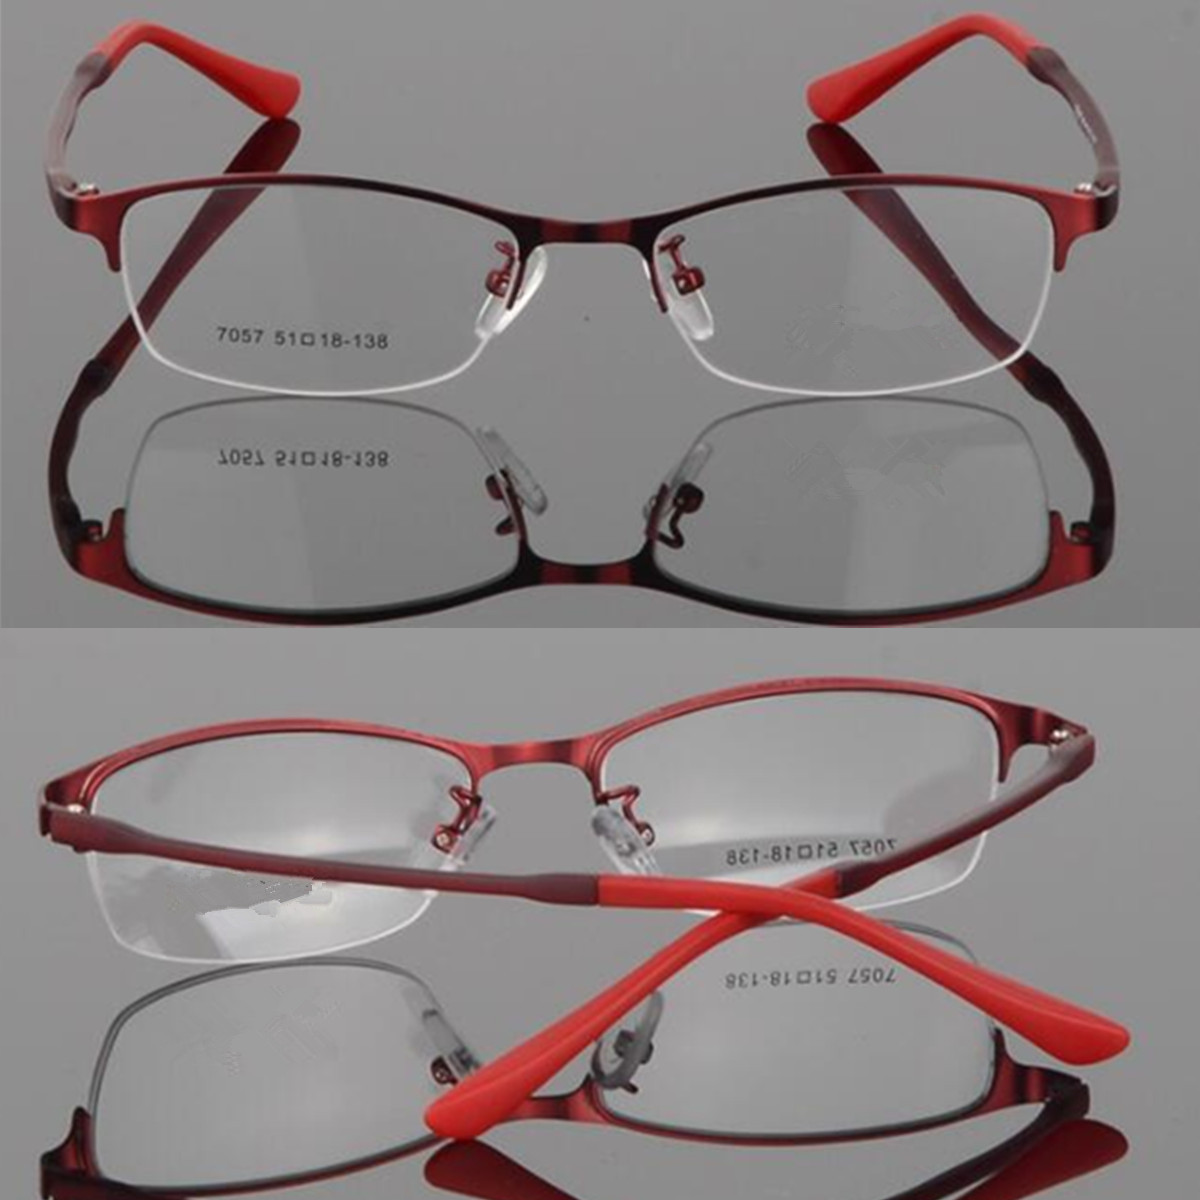 Eye Glasses Half Rimless Glasses Frame Eyeglasses Clear Lens Metal&TR90 Optical Glasses RX Spectacles